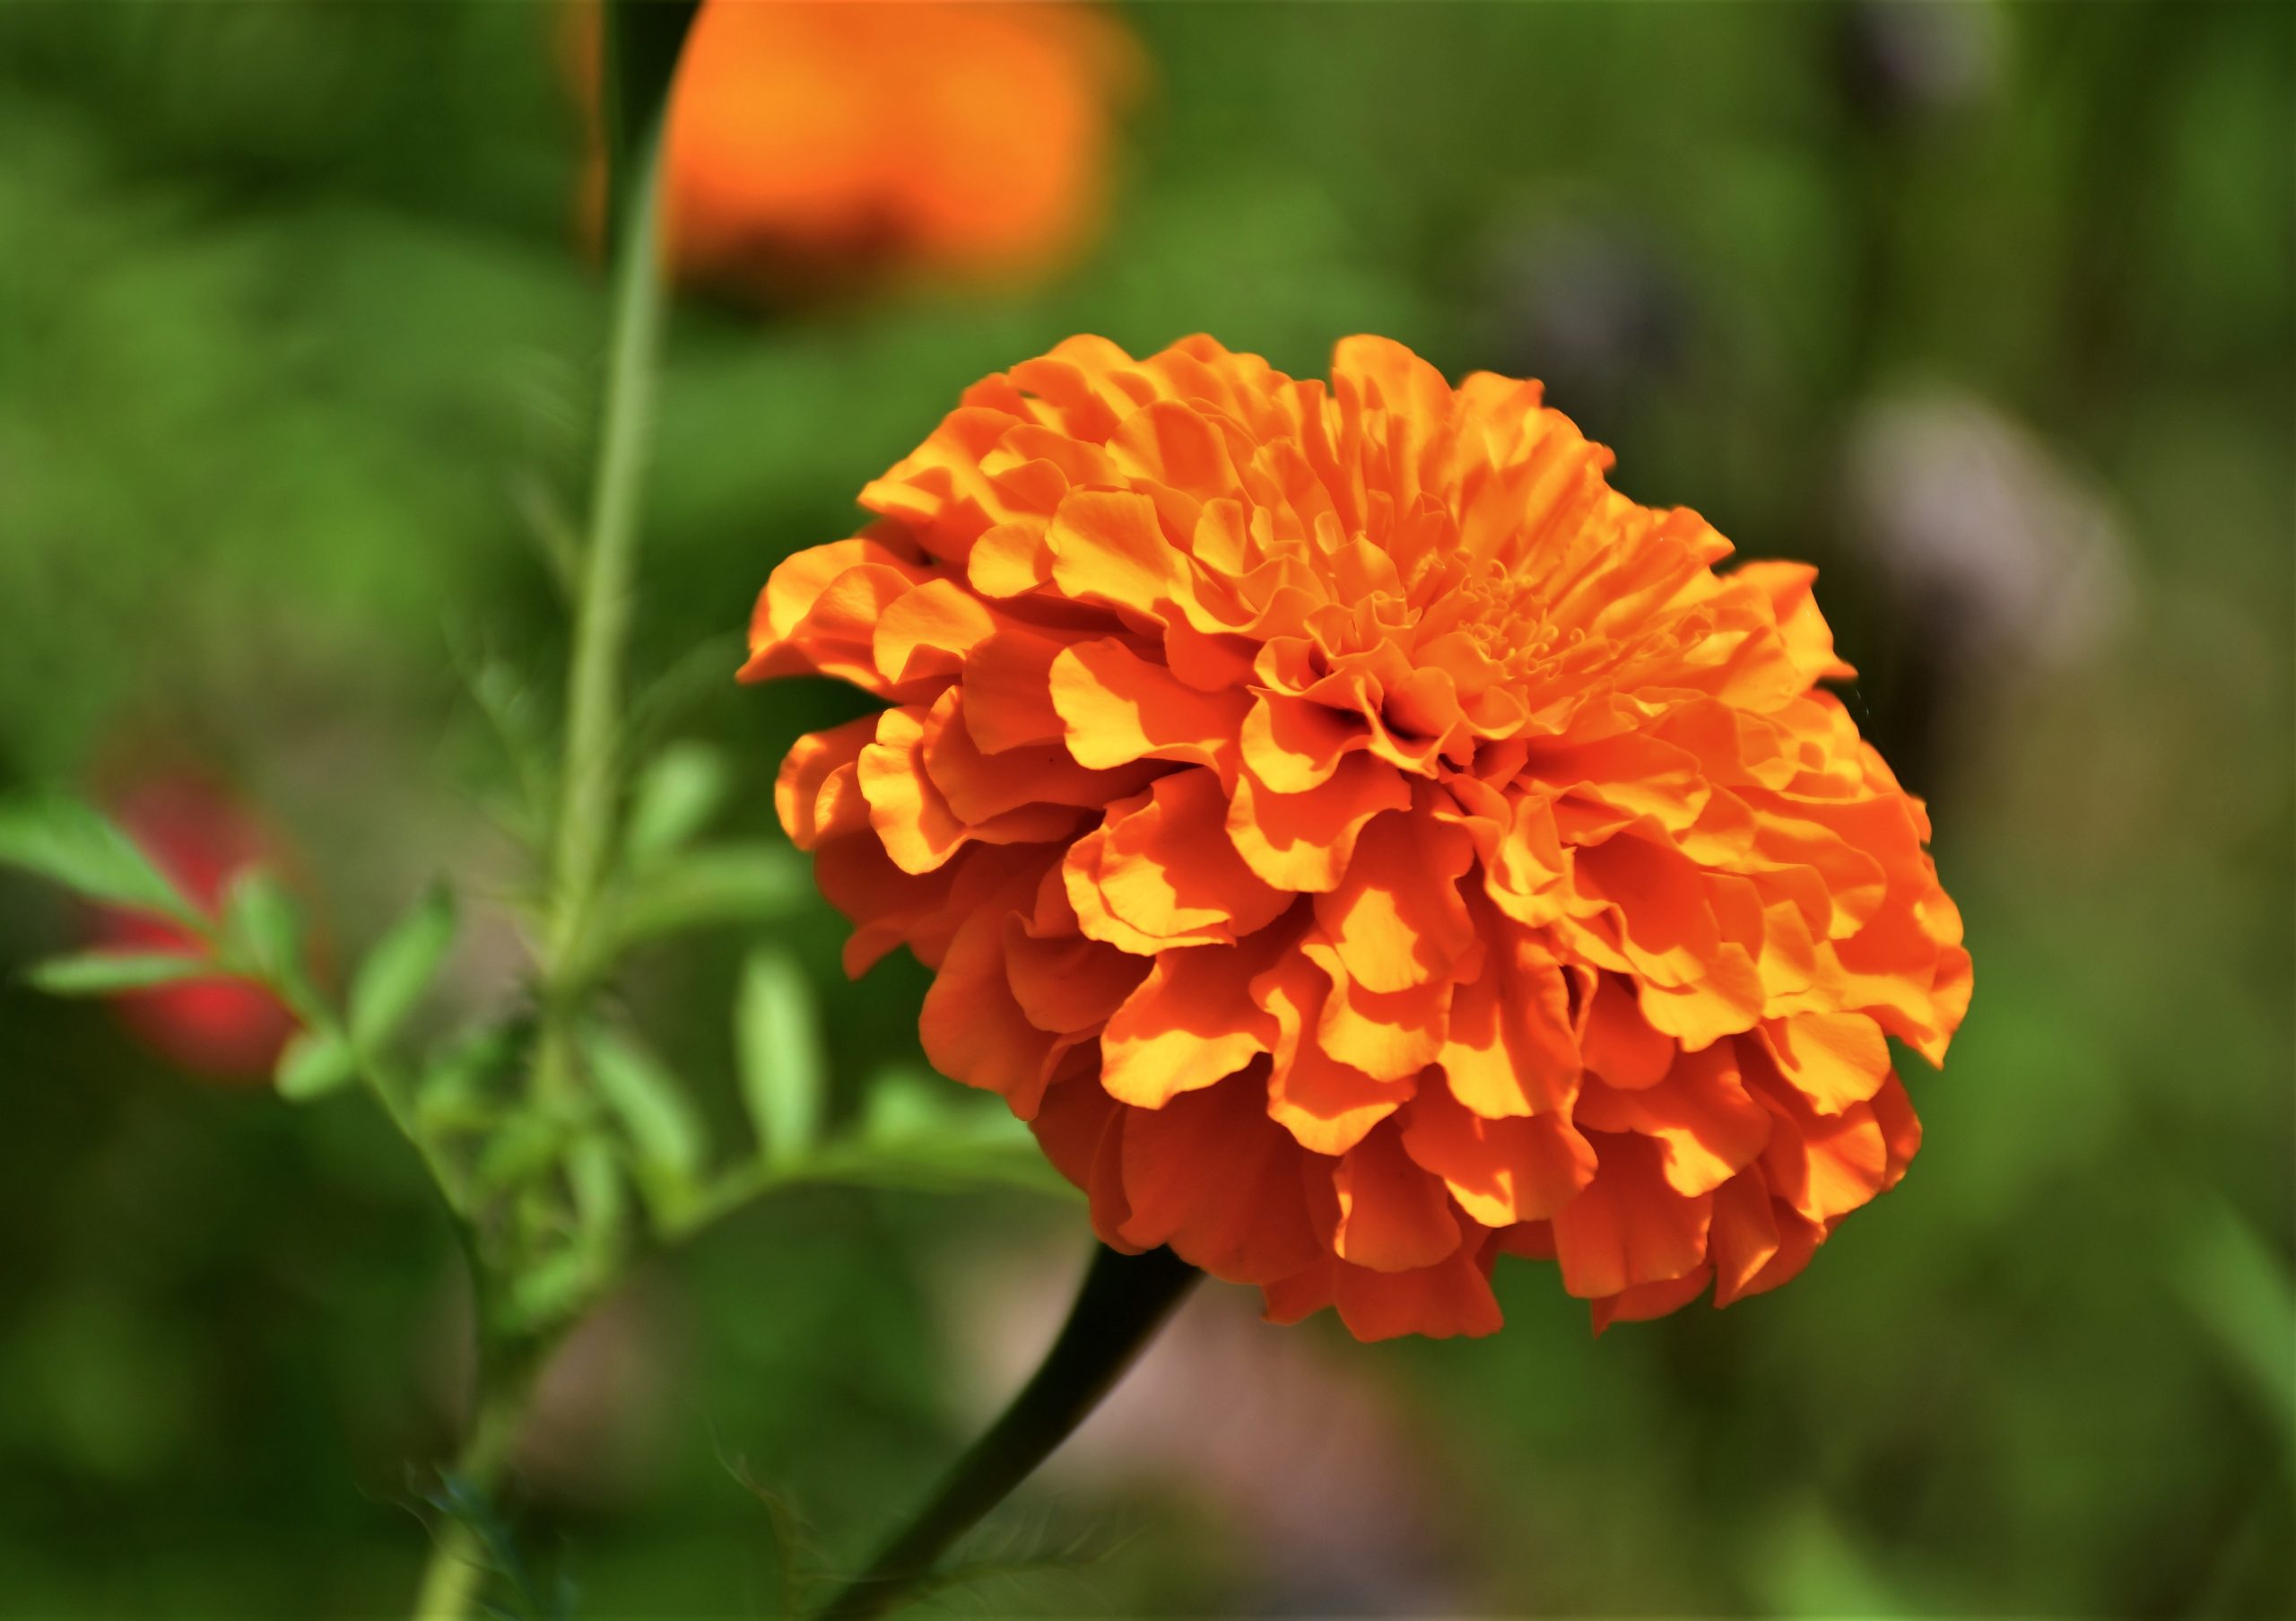 a marigold flower in a garden